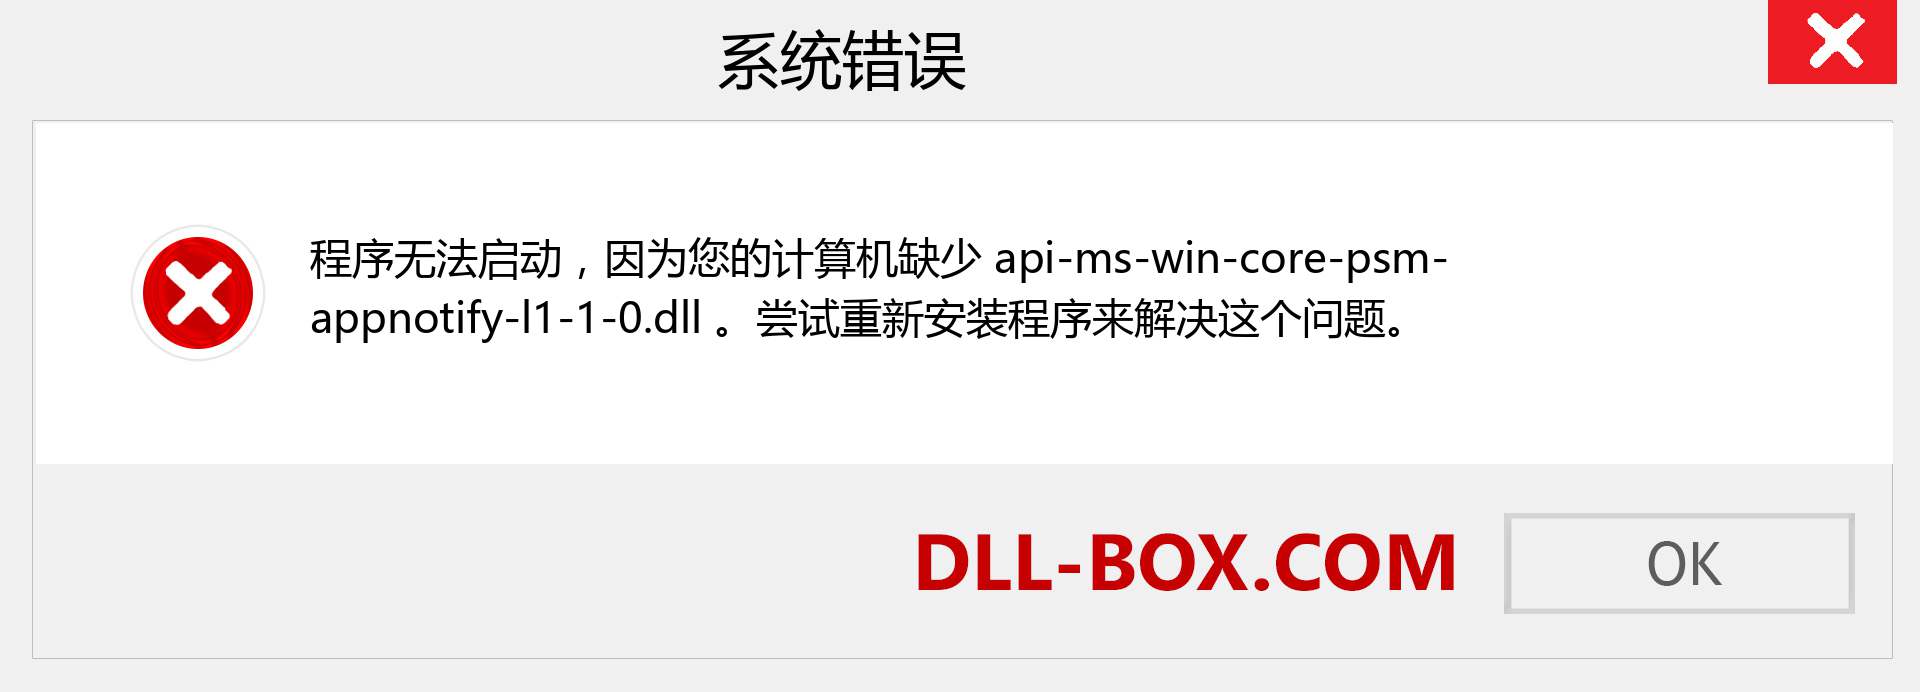 api-ms-win-core-psm-appnotify-l1-1-0.dll 文件丢失？。 适用于 Windows 7、8、10 的下载 - 修复 Windows、照片、图像上的 api-ms-win-core-psm-appnotify-l1-1-0 dll 丢失错误